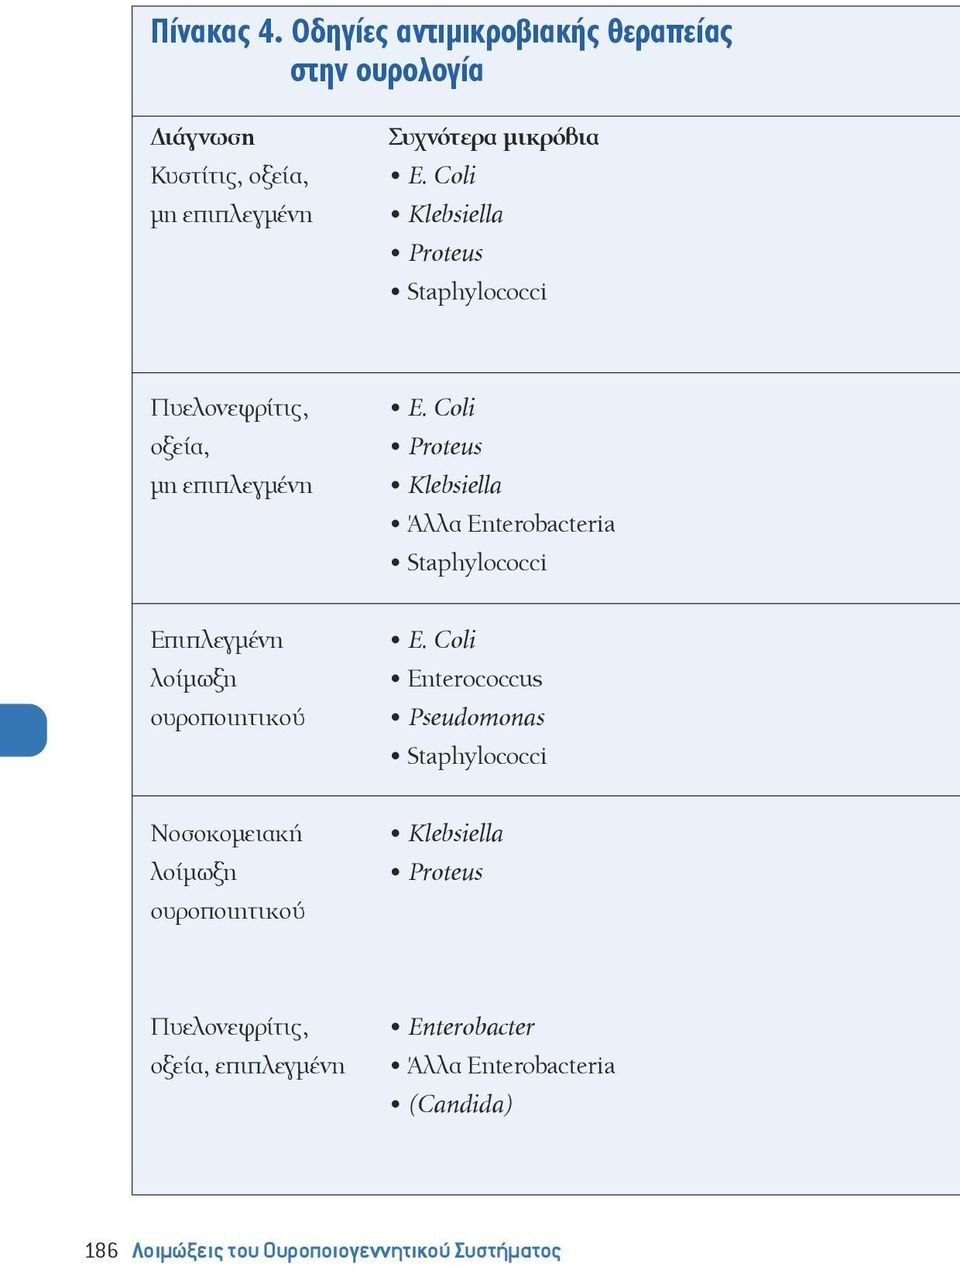 Coli Proteus Klebsiella Άλλα Staphylococci Επιπλεγμένη λοίμωξη ουροποιητικού E.